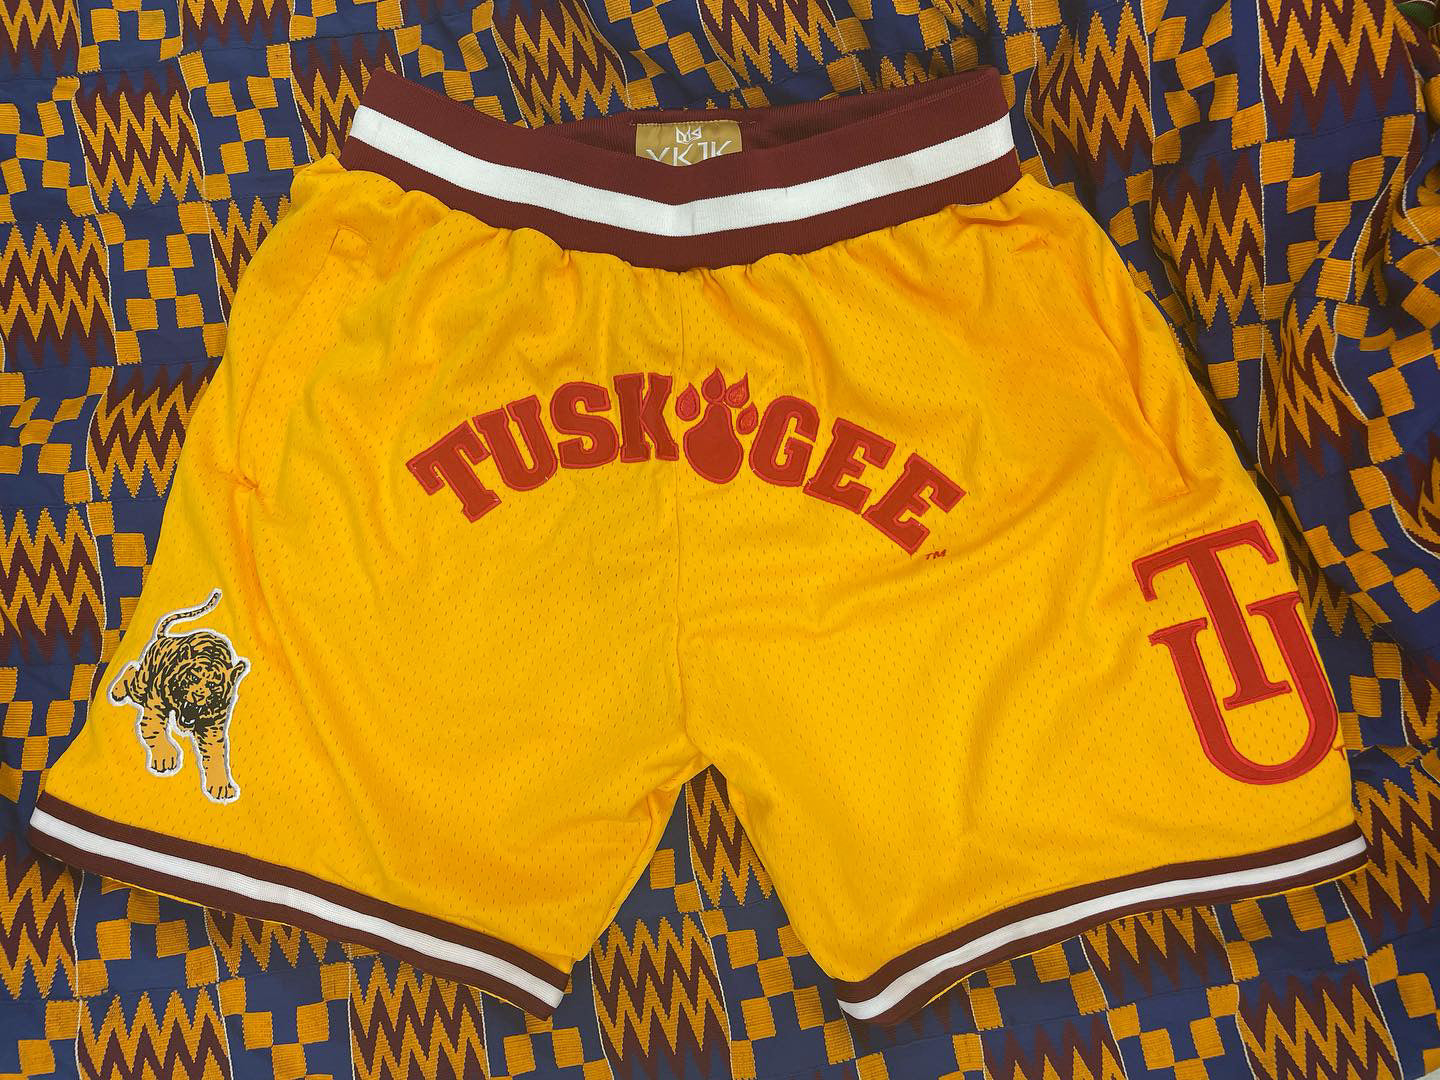 Tuskegee University Basketball Shorts 1.0